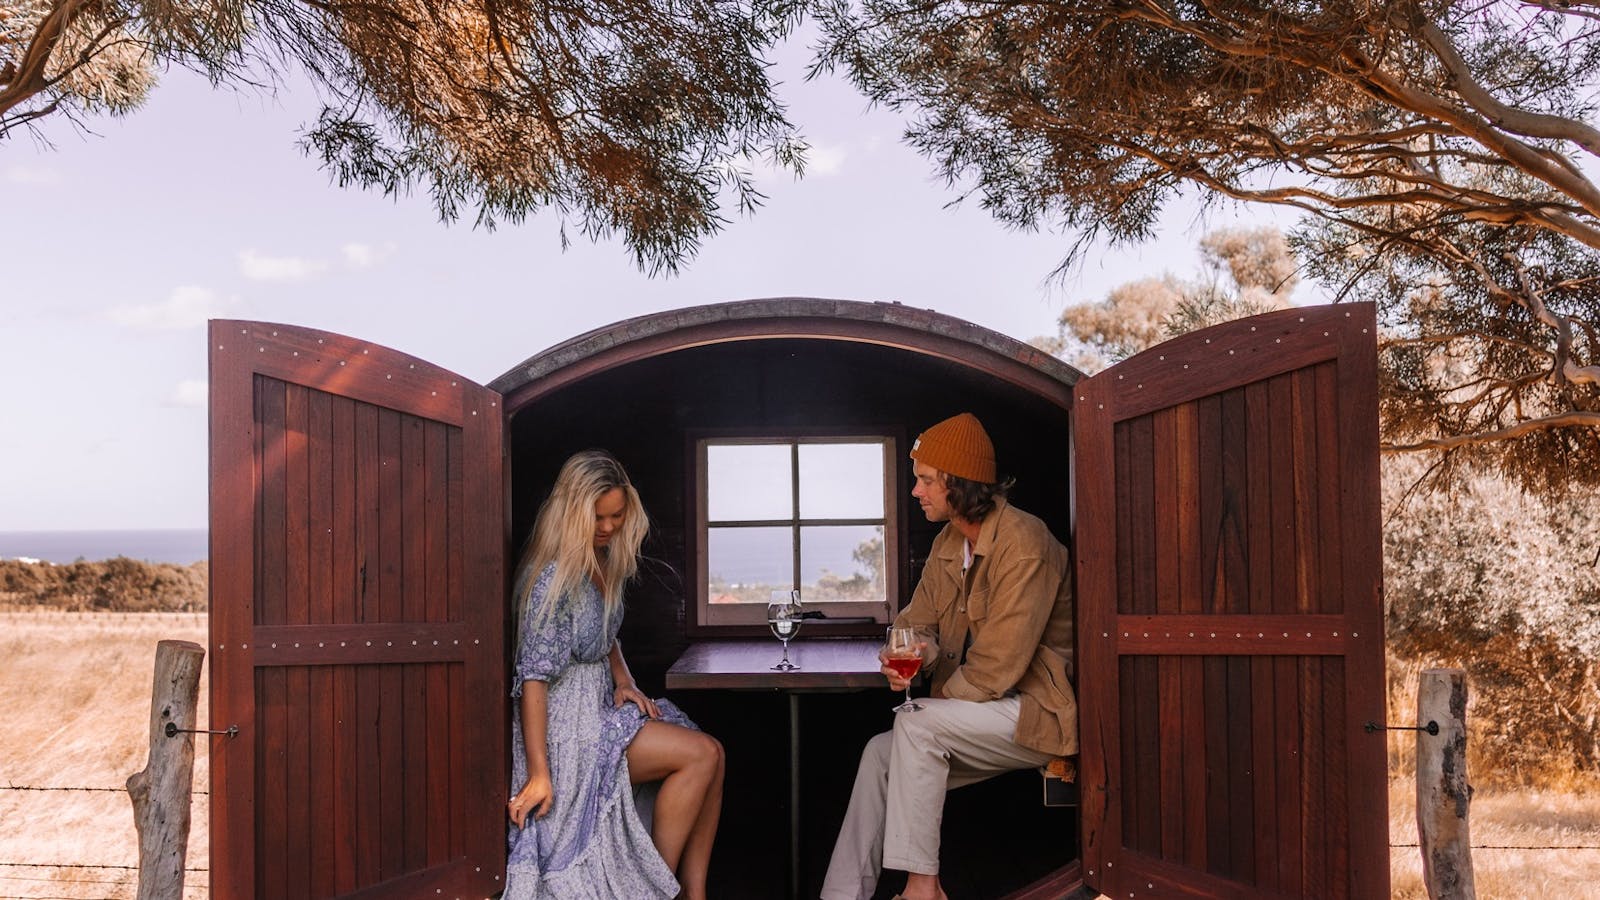 Two people sitting inside the wine barrel pod, overlooking the ocean